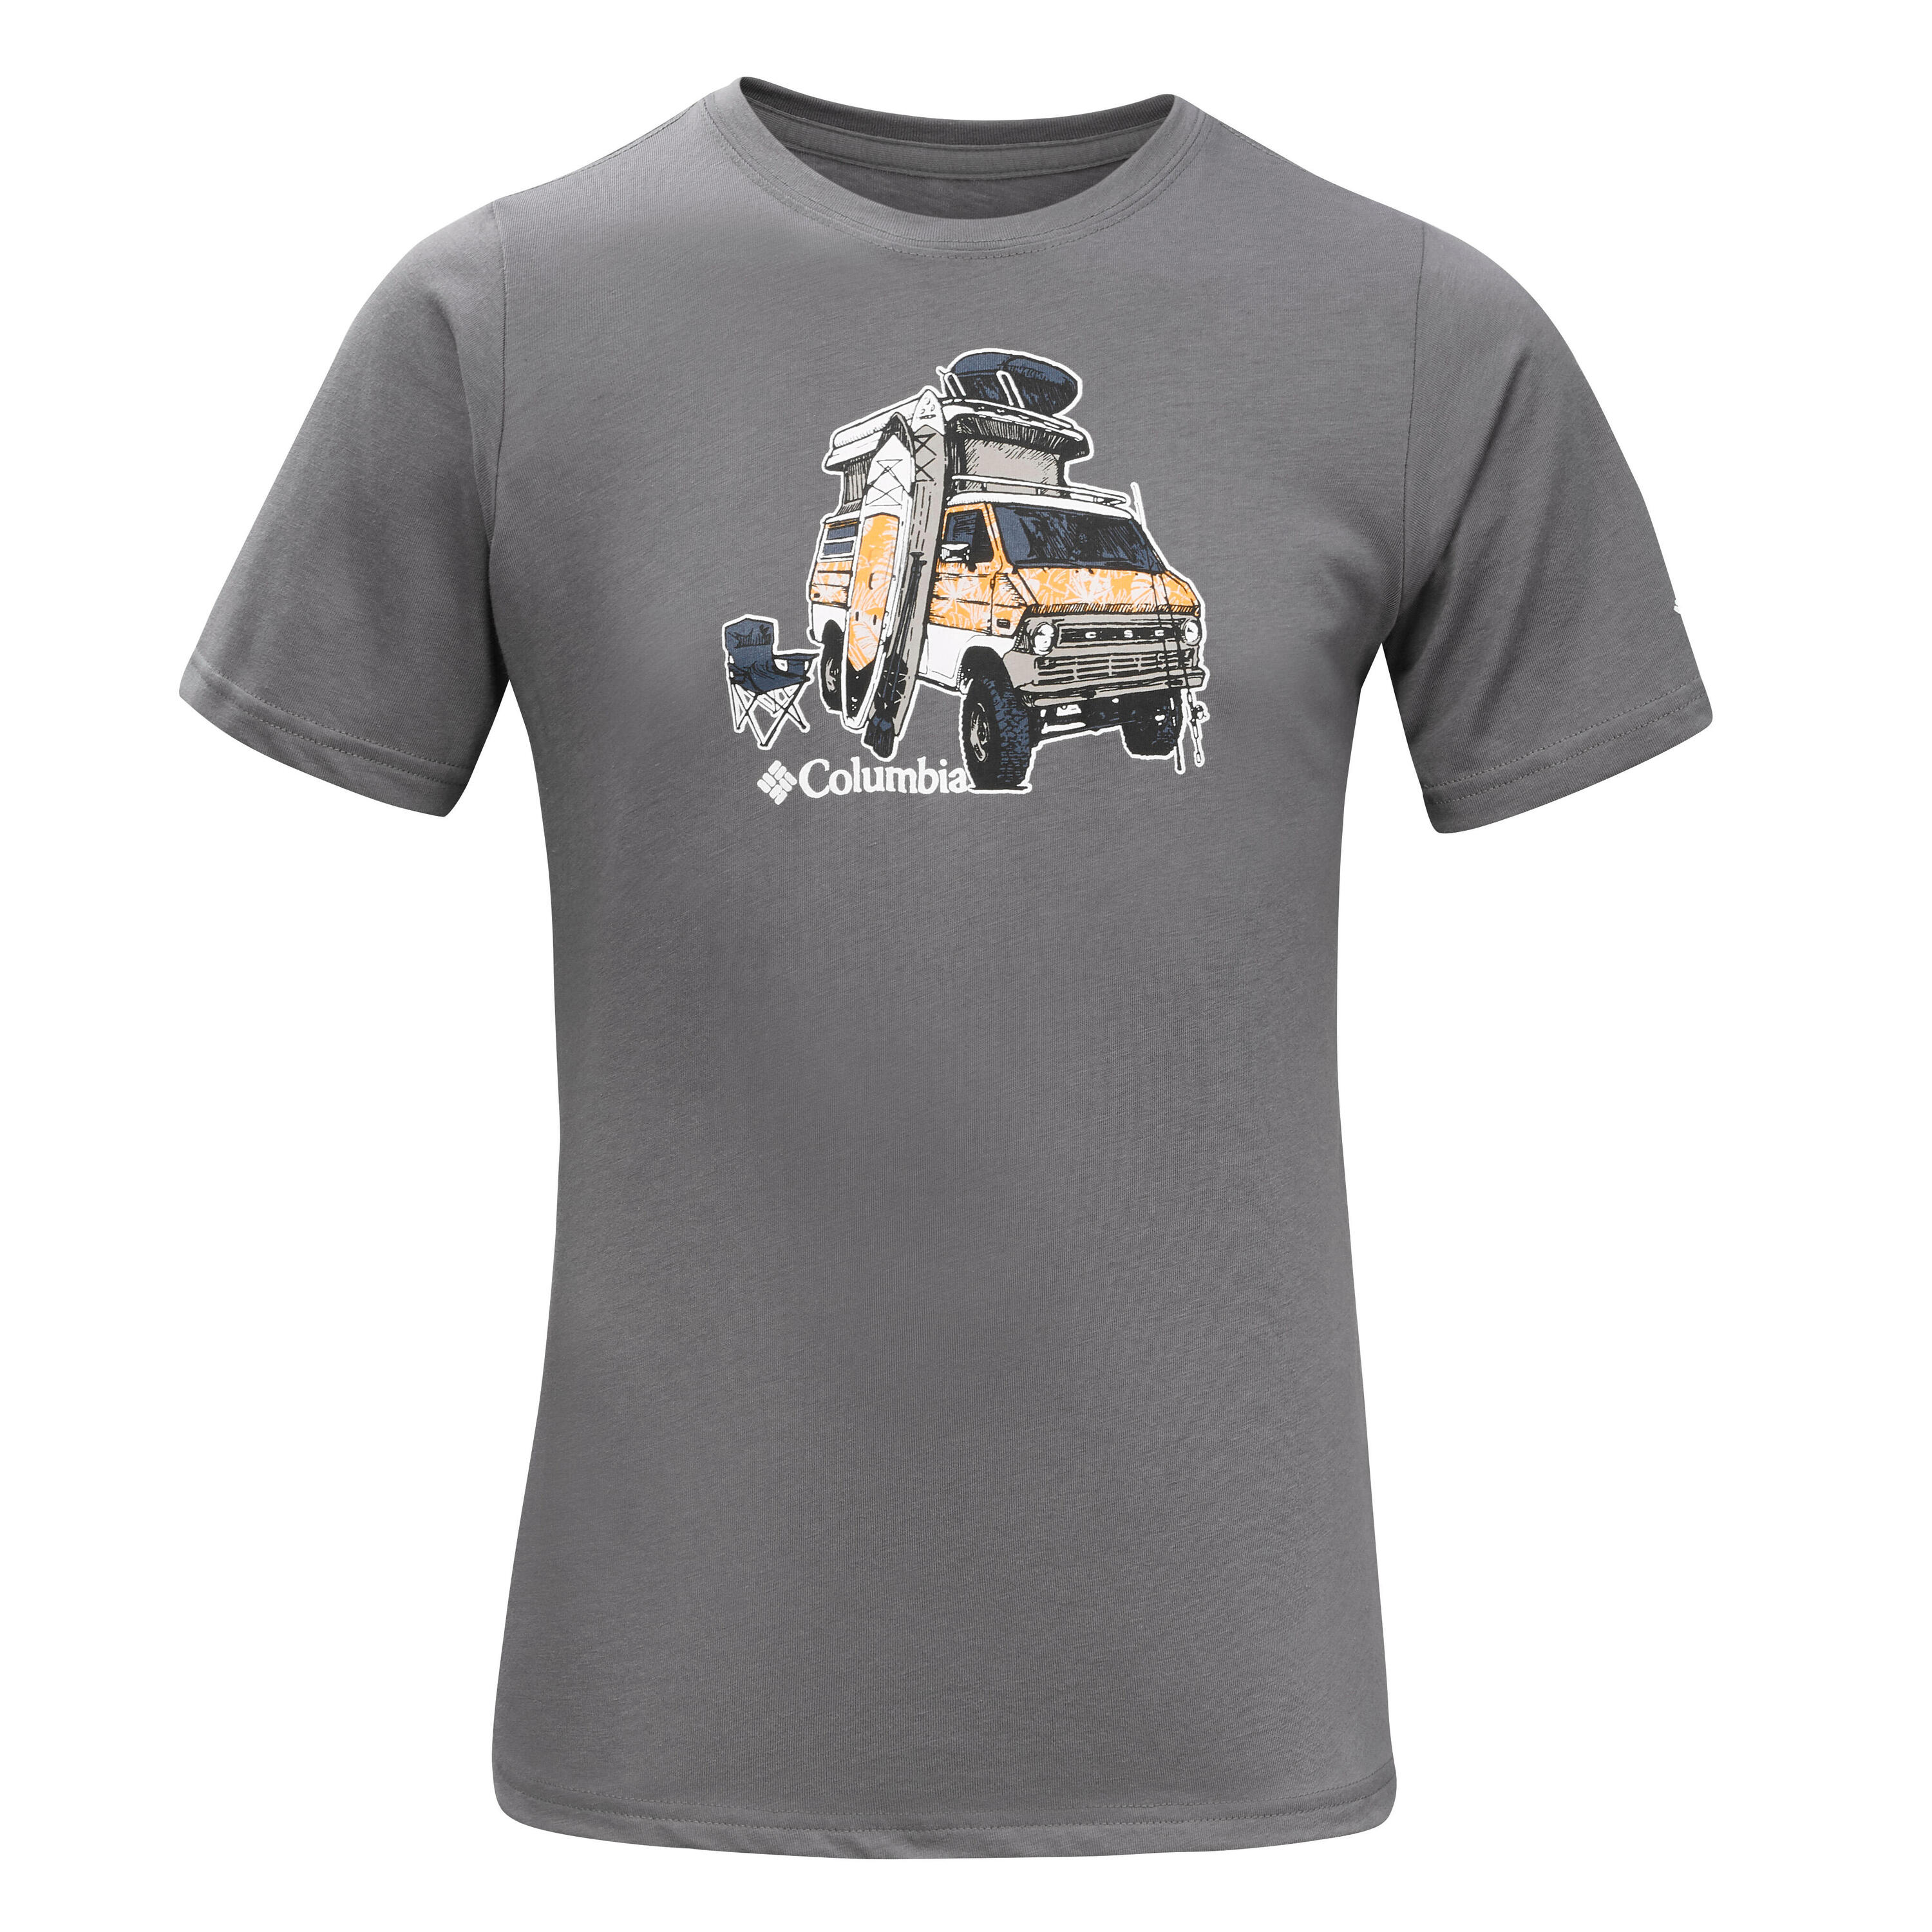 Kids' Hiking T-Shirt Columbia Tech Tee - 7 to 15 Years - grey 3/5